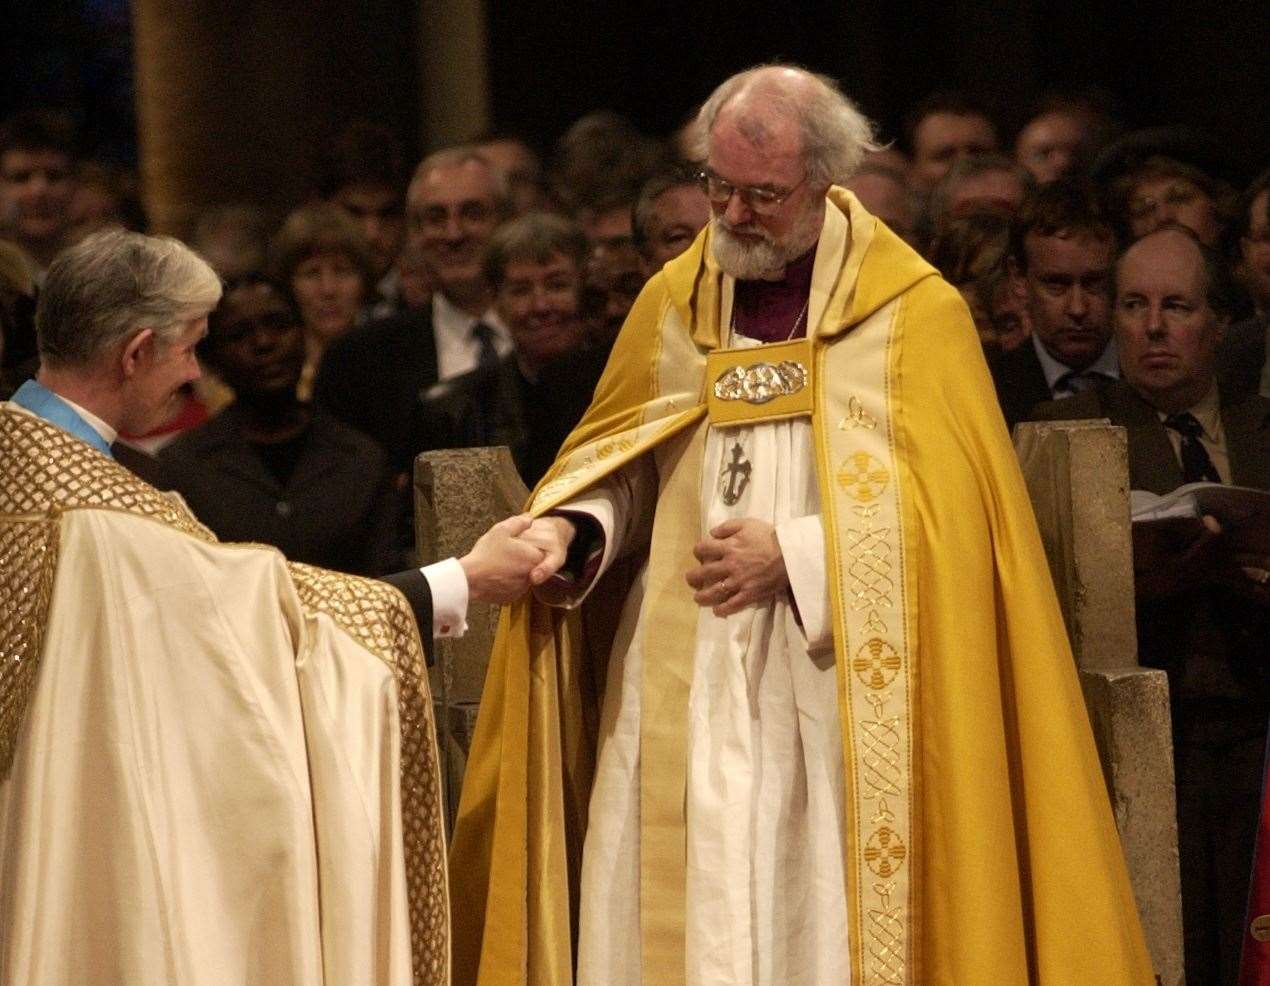 Dean Robert at the enthronement of Archbishop Rowan Williams in 2003